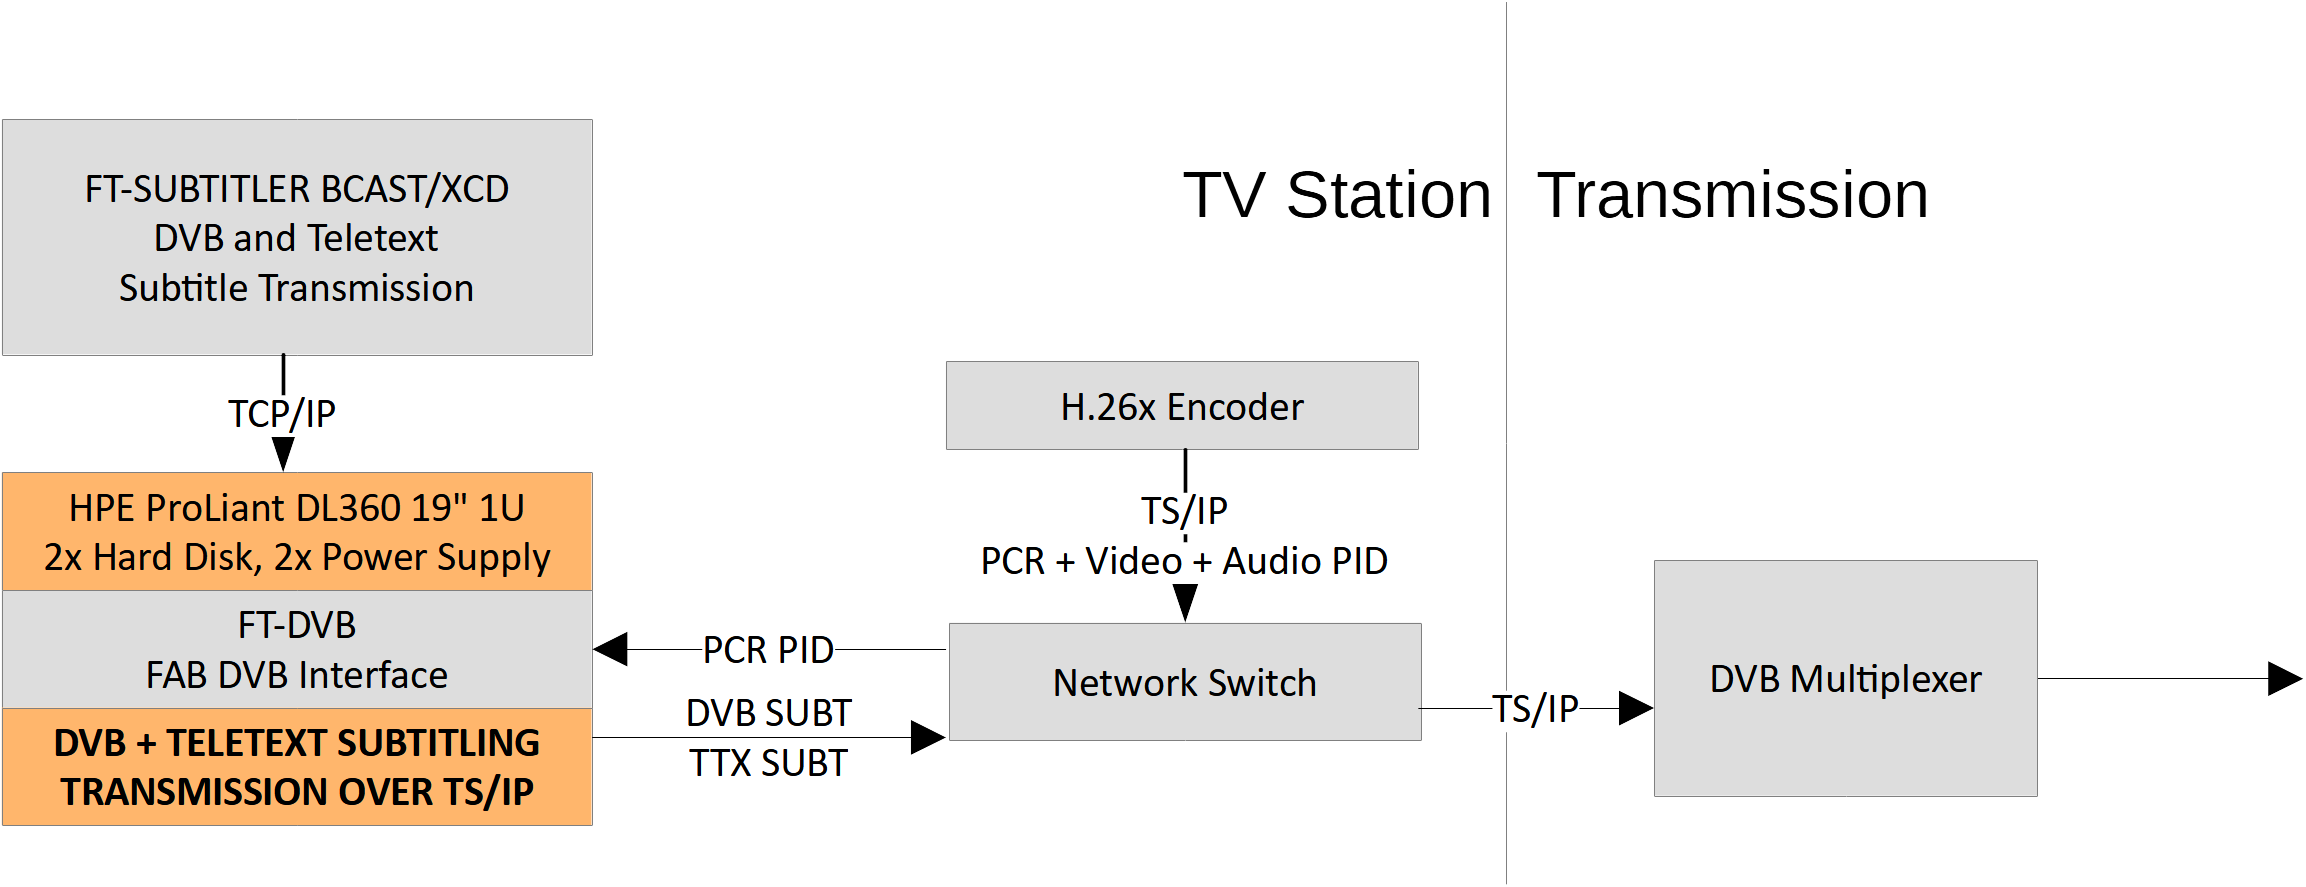 DVB and Teletext subtitling transmission over IP